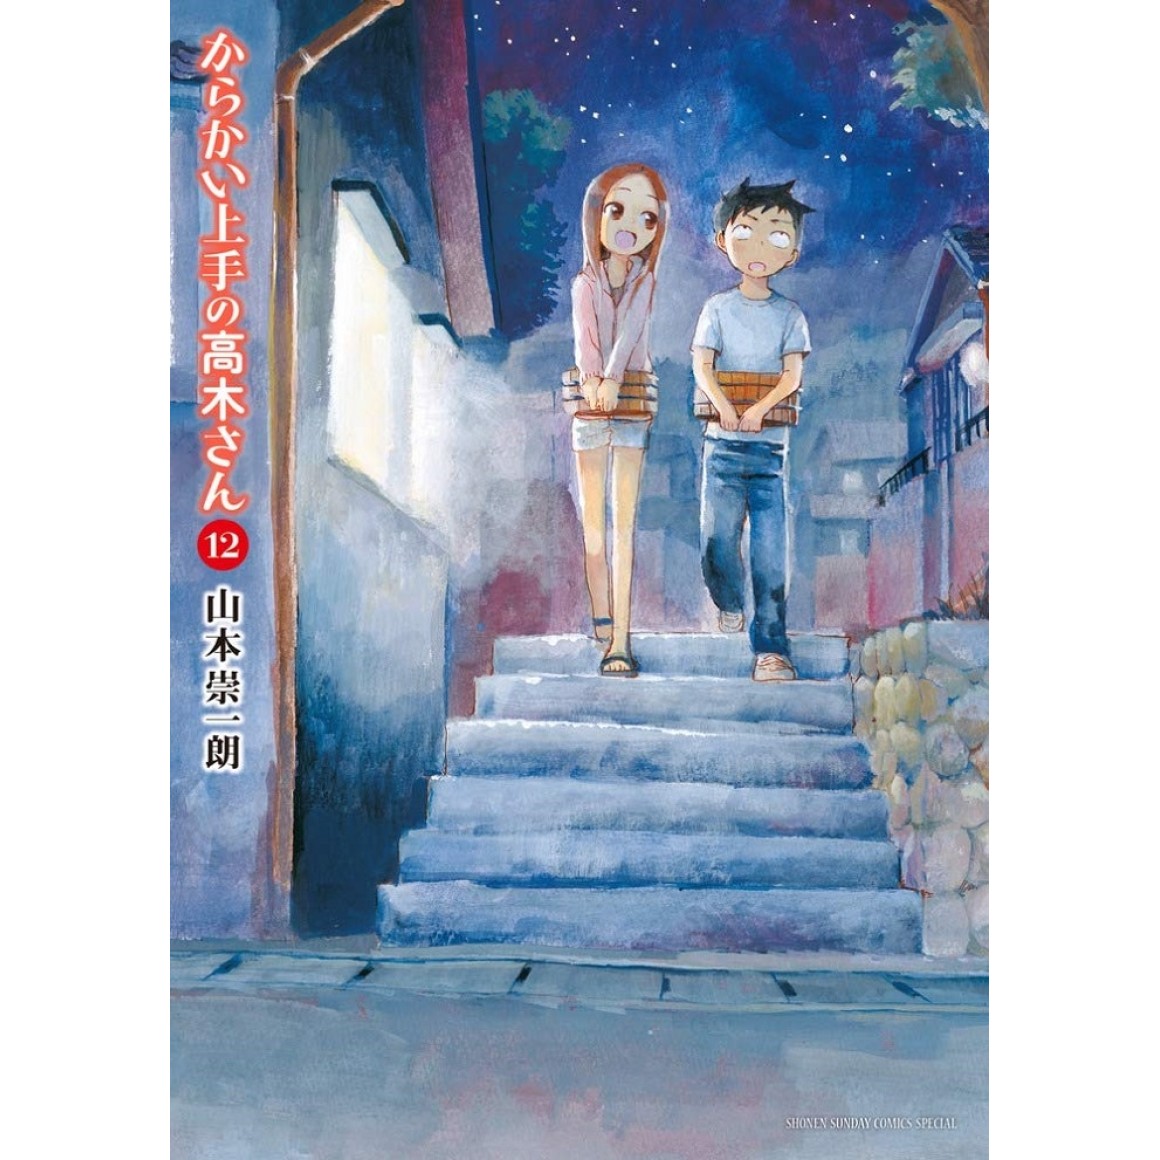 Karakai Jozu no Takagi-san Vol. 13 (Teasing Master Takagi-san) -  ISBN:9784098500345